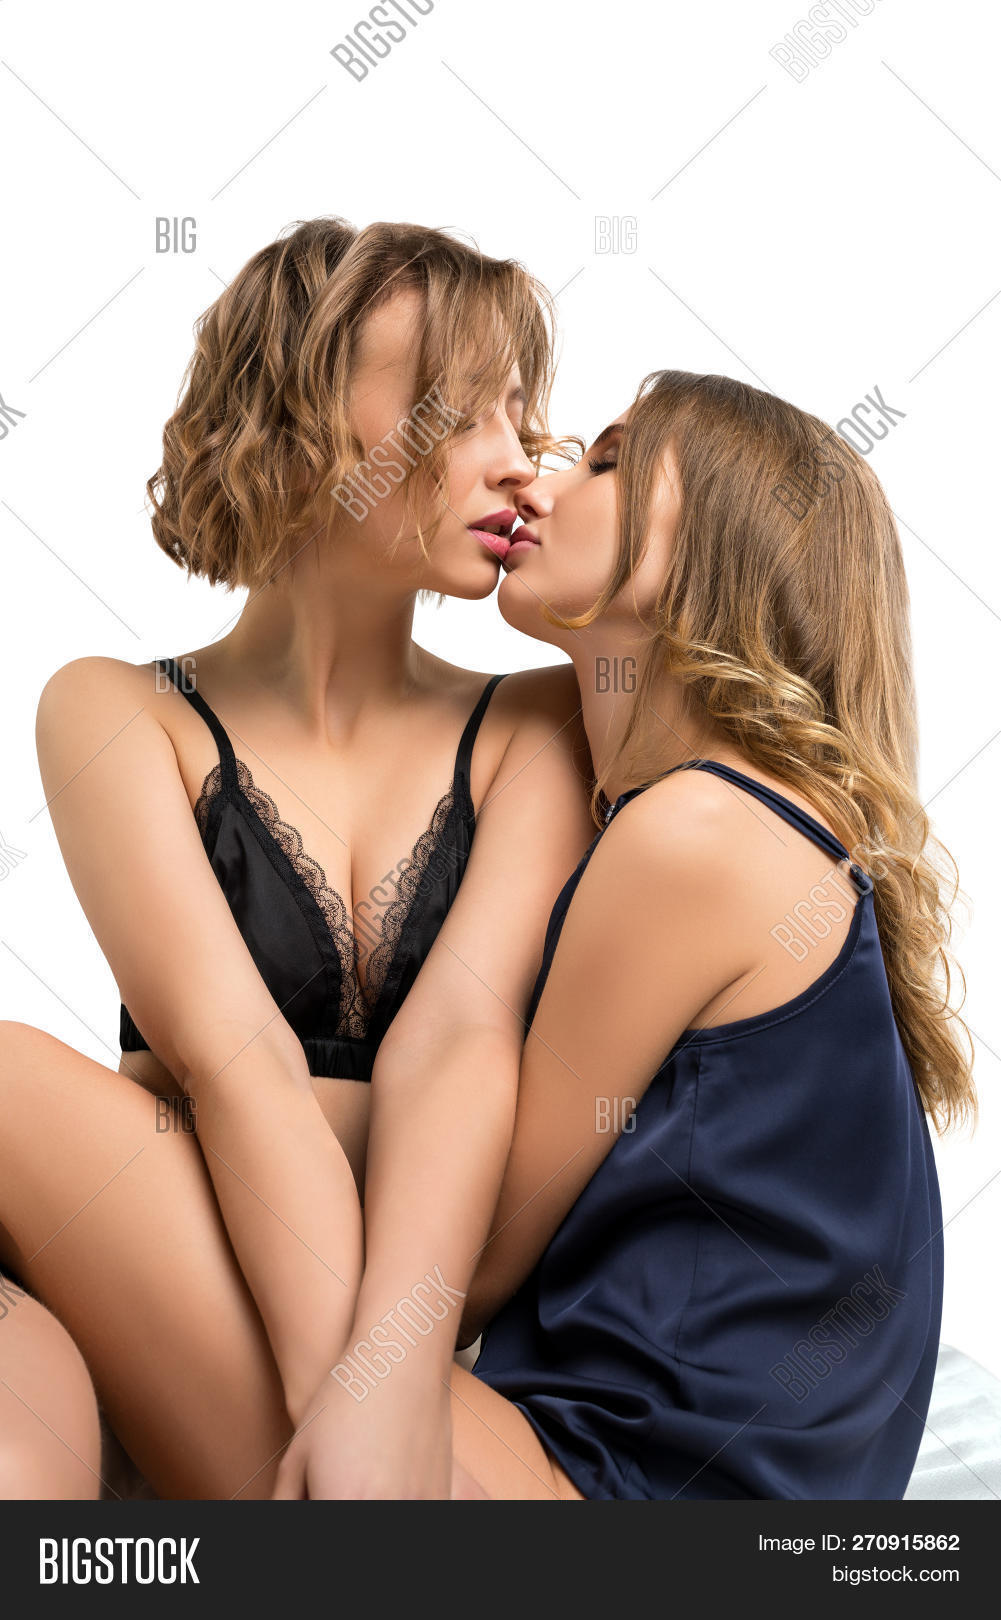 anirudha ghosh add photo sexy women kissing